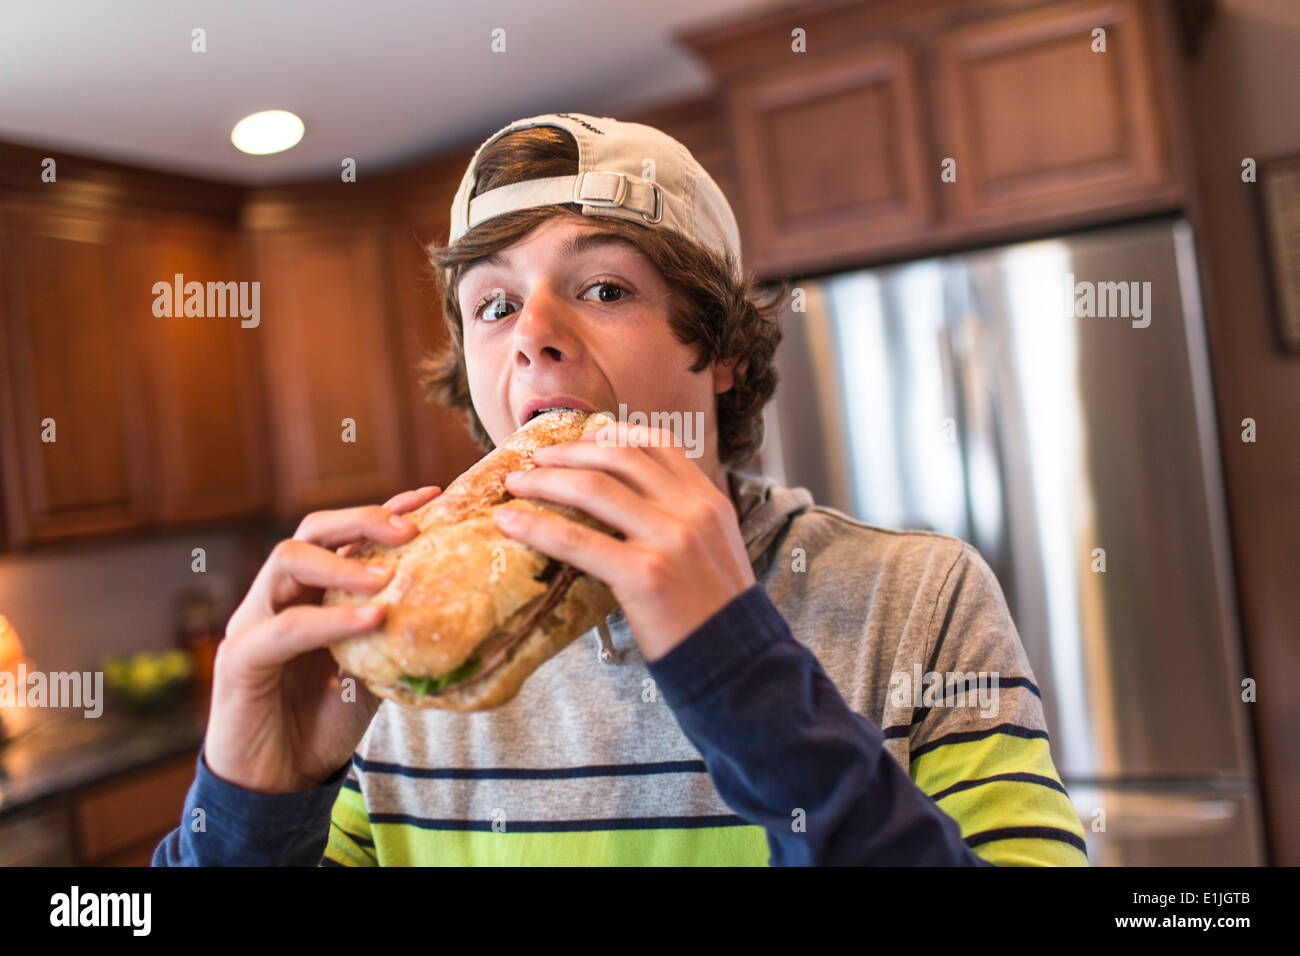 Teenage boy in kitchen biting large sandwich Stock Photo